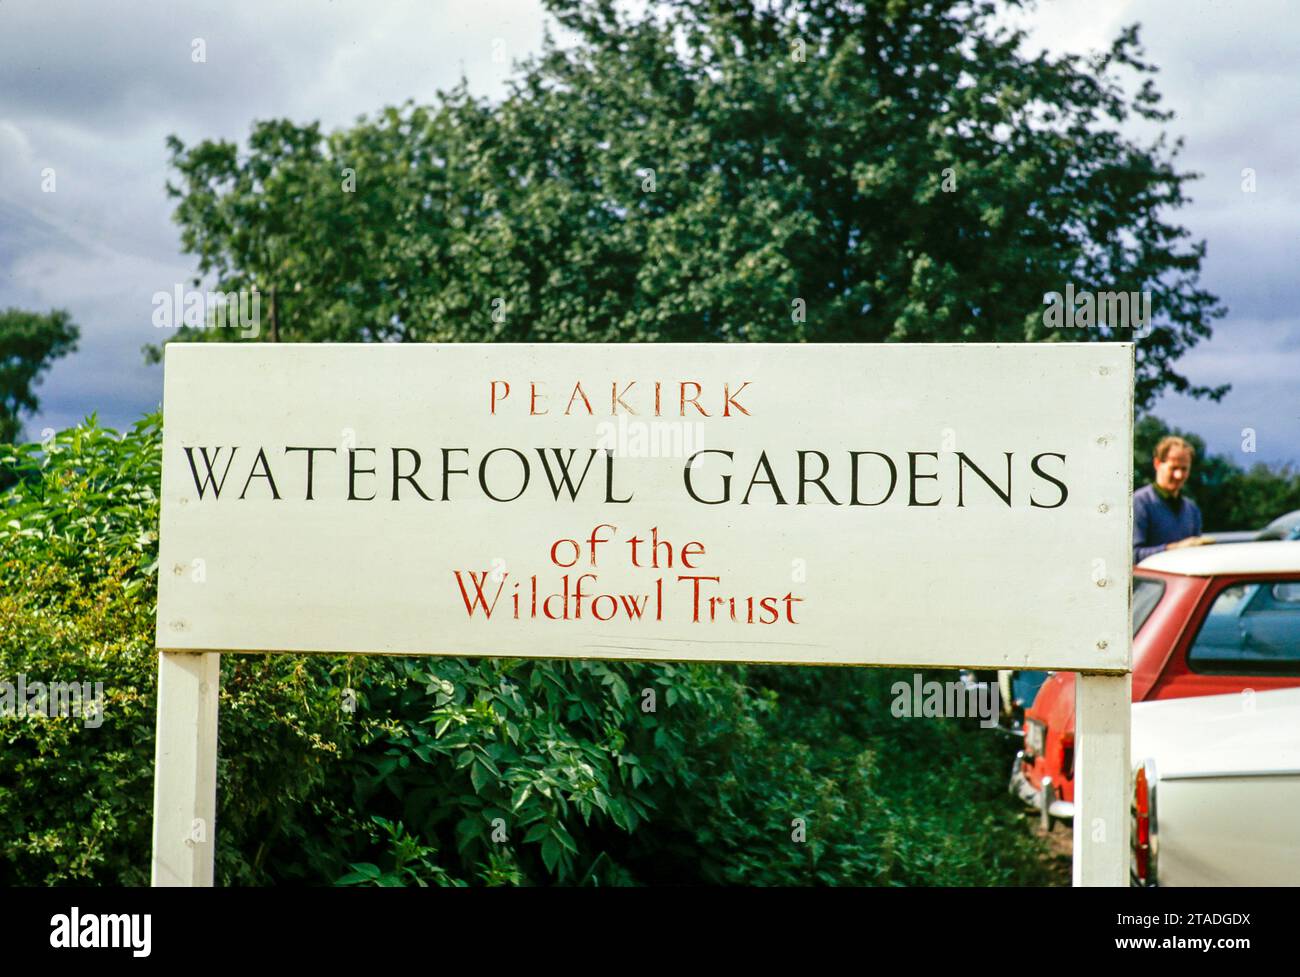 Peakirk Waterfowl Gardens, Wildfowl Trust,  Peakirk, Peterborough, Northamptonshire, England, UK1969 Stock Photo